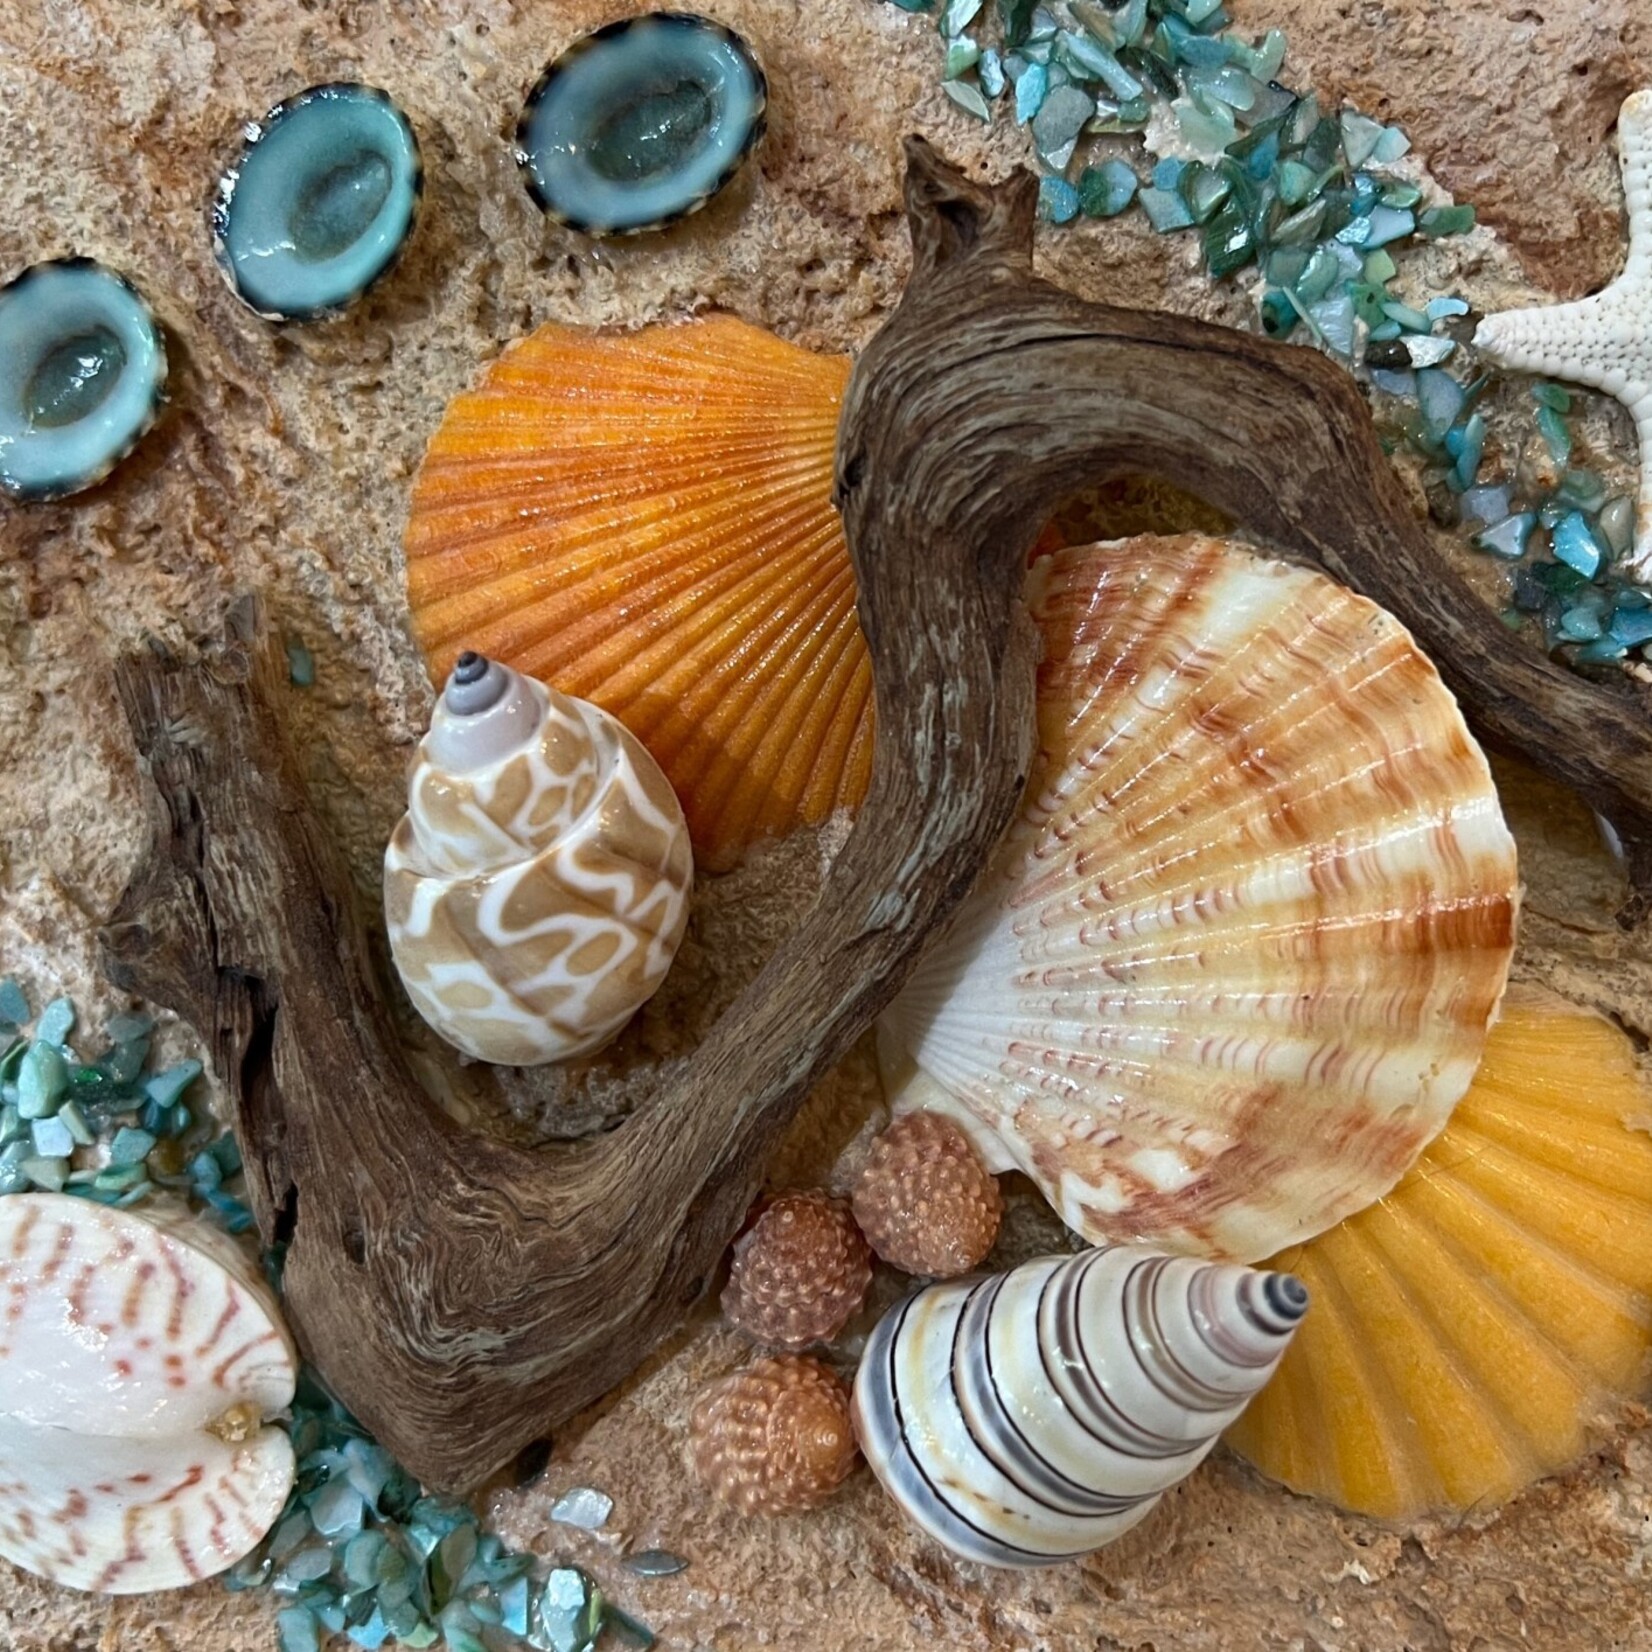 Carol Merritt Mixed media with seashells and driftwood, 7x5" on easel, CARM